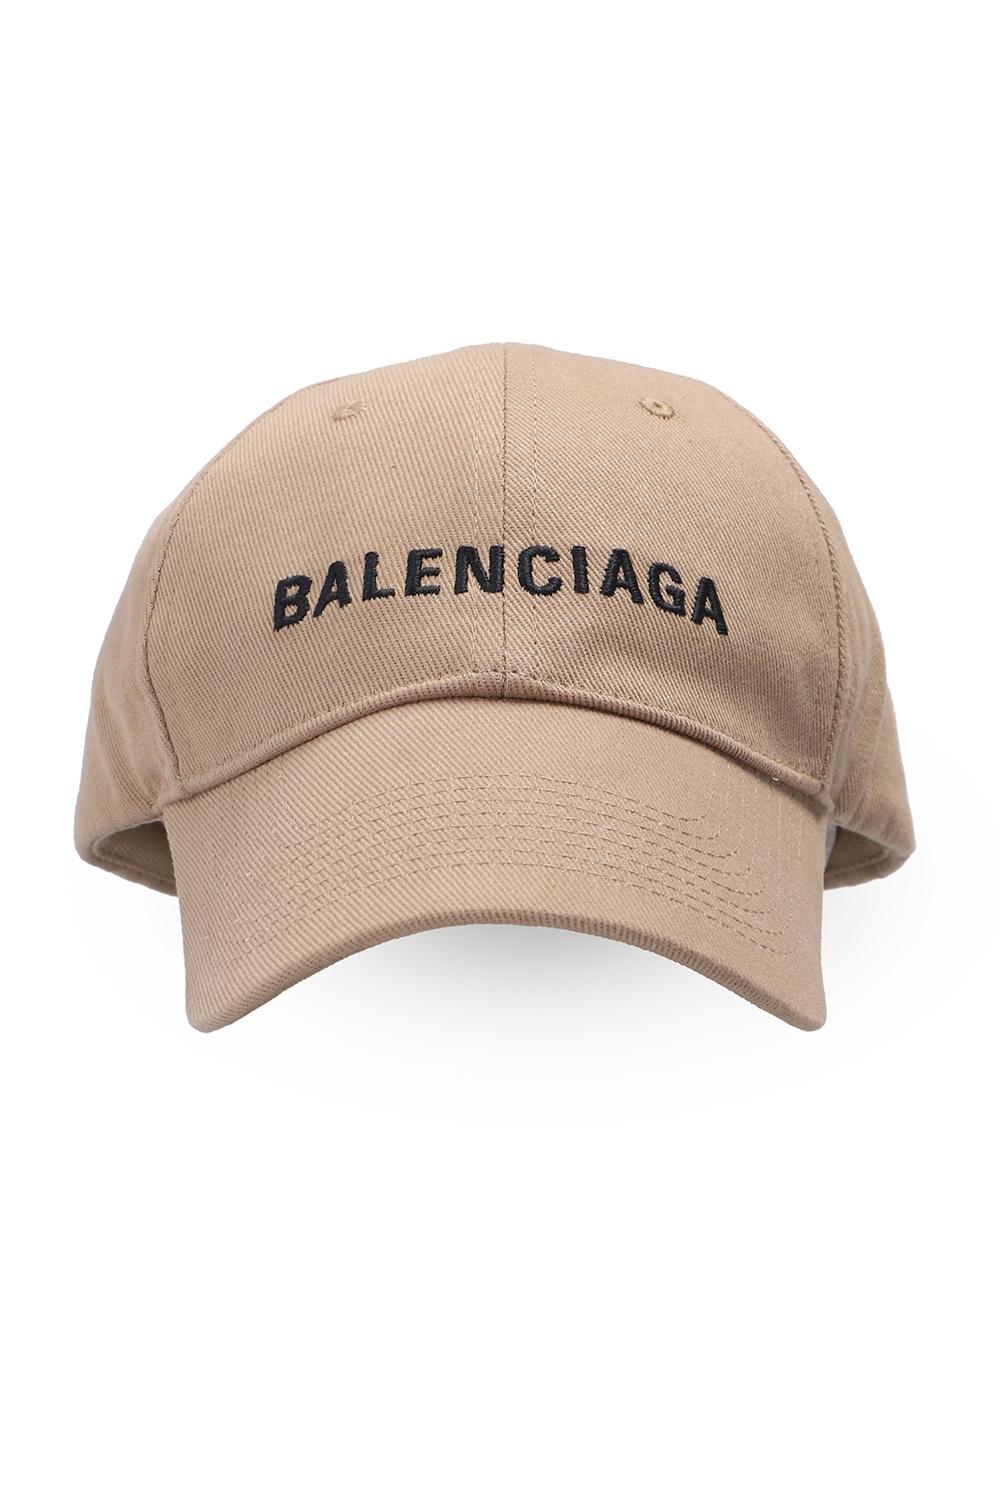 Balenciaga Cotton Branded Baseball Cap Beige in Natural for Men - Lyst